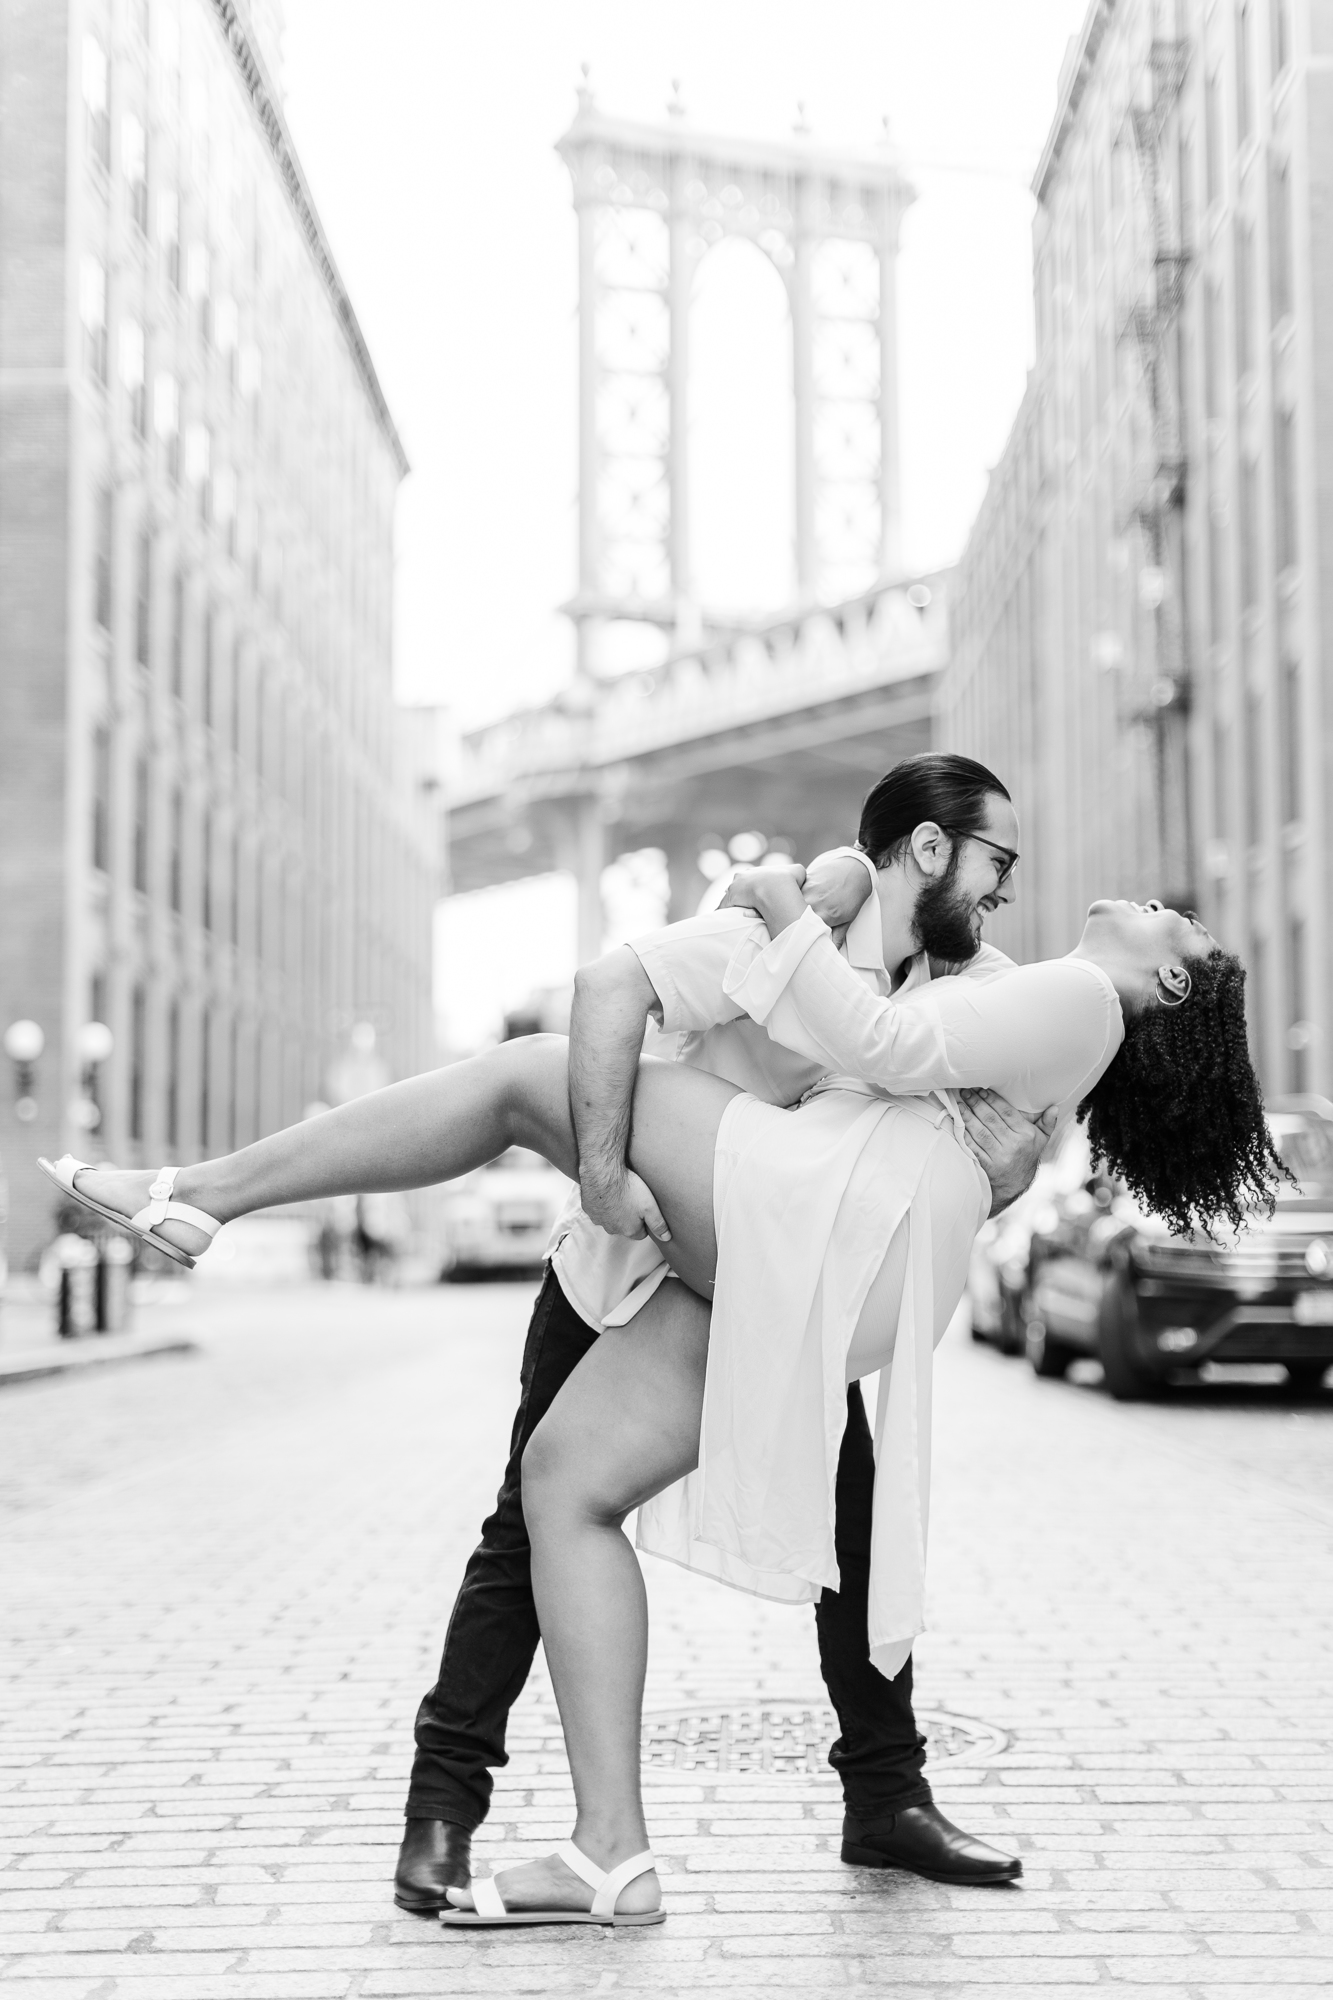 Personal Engagement Shoot on the Brooklyn Bridge